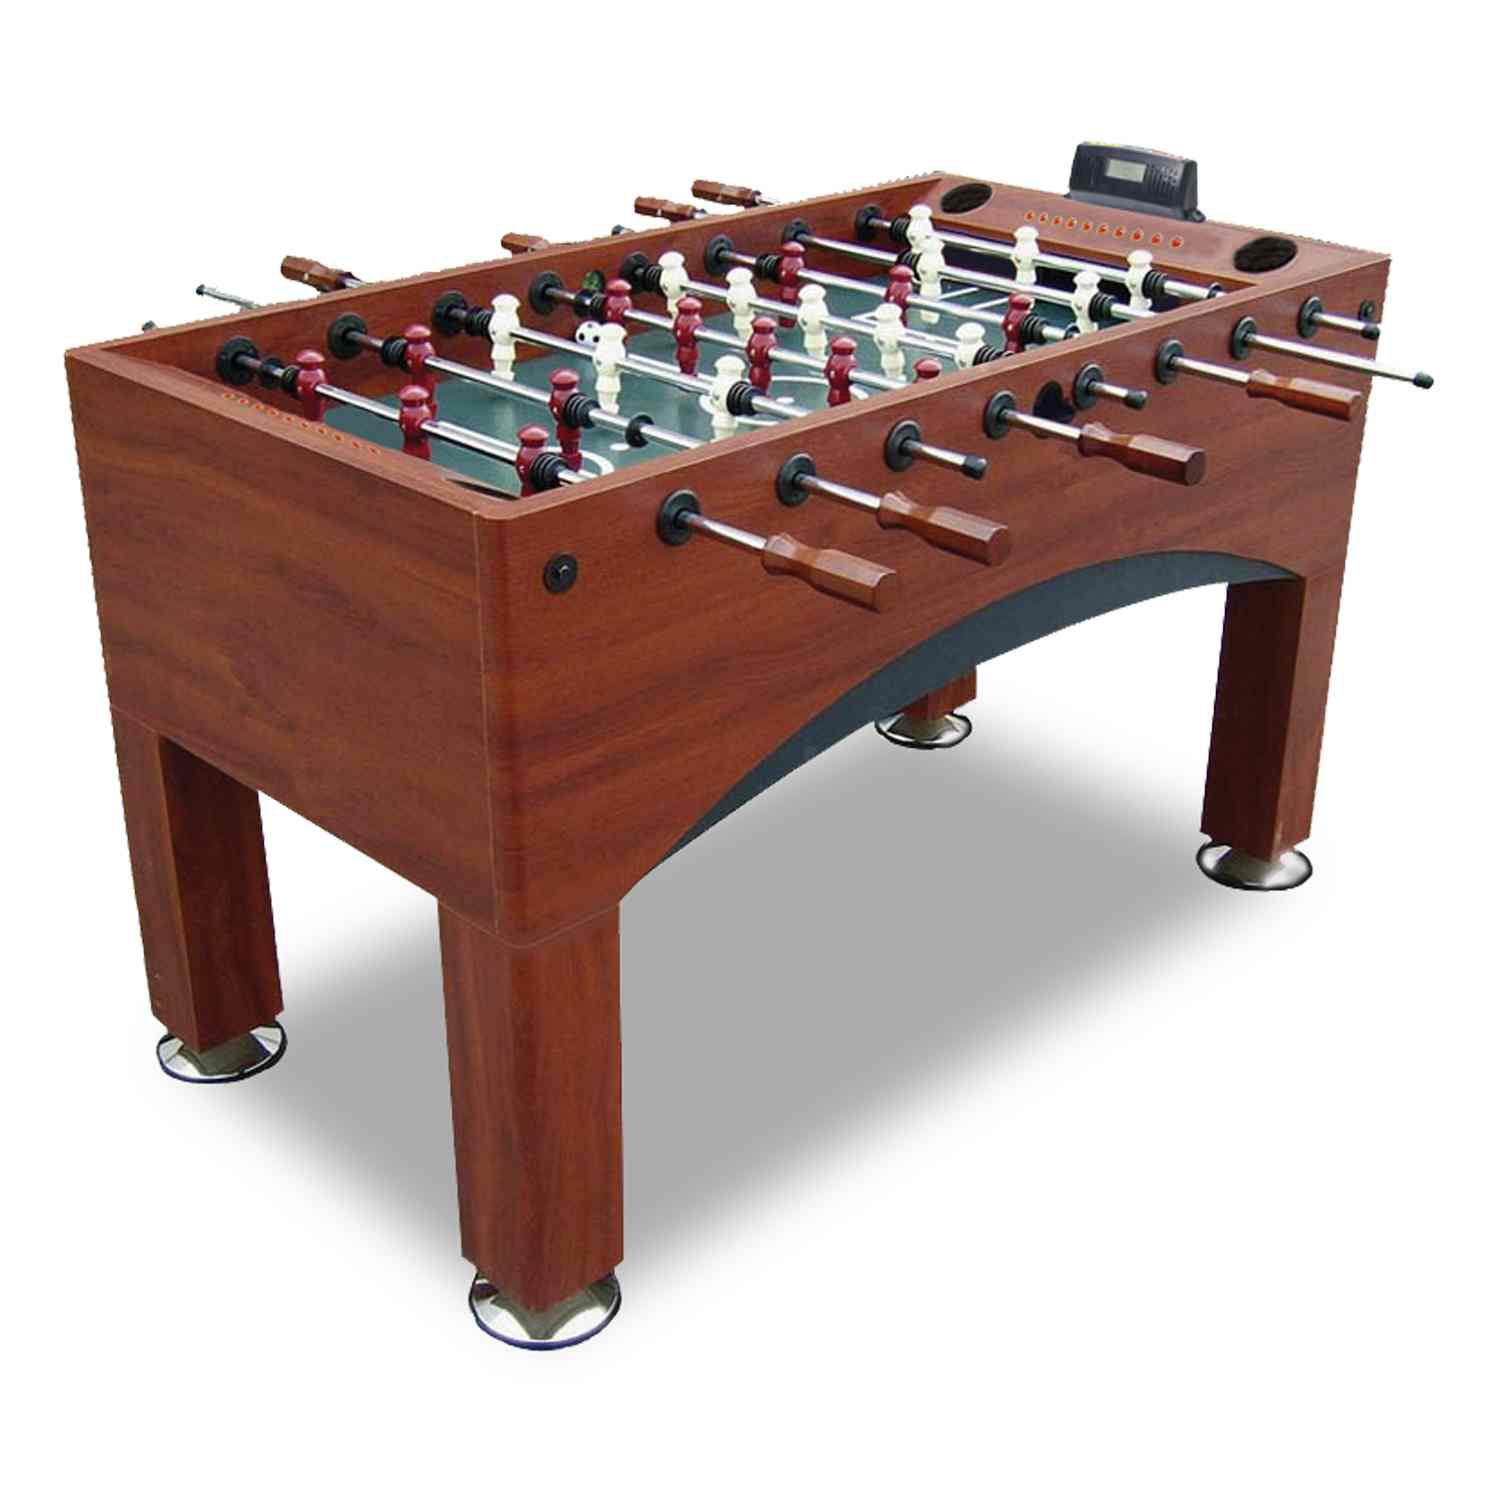 56" Table Soccer Table w/Goalflex Technology